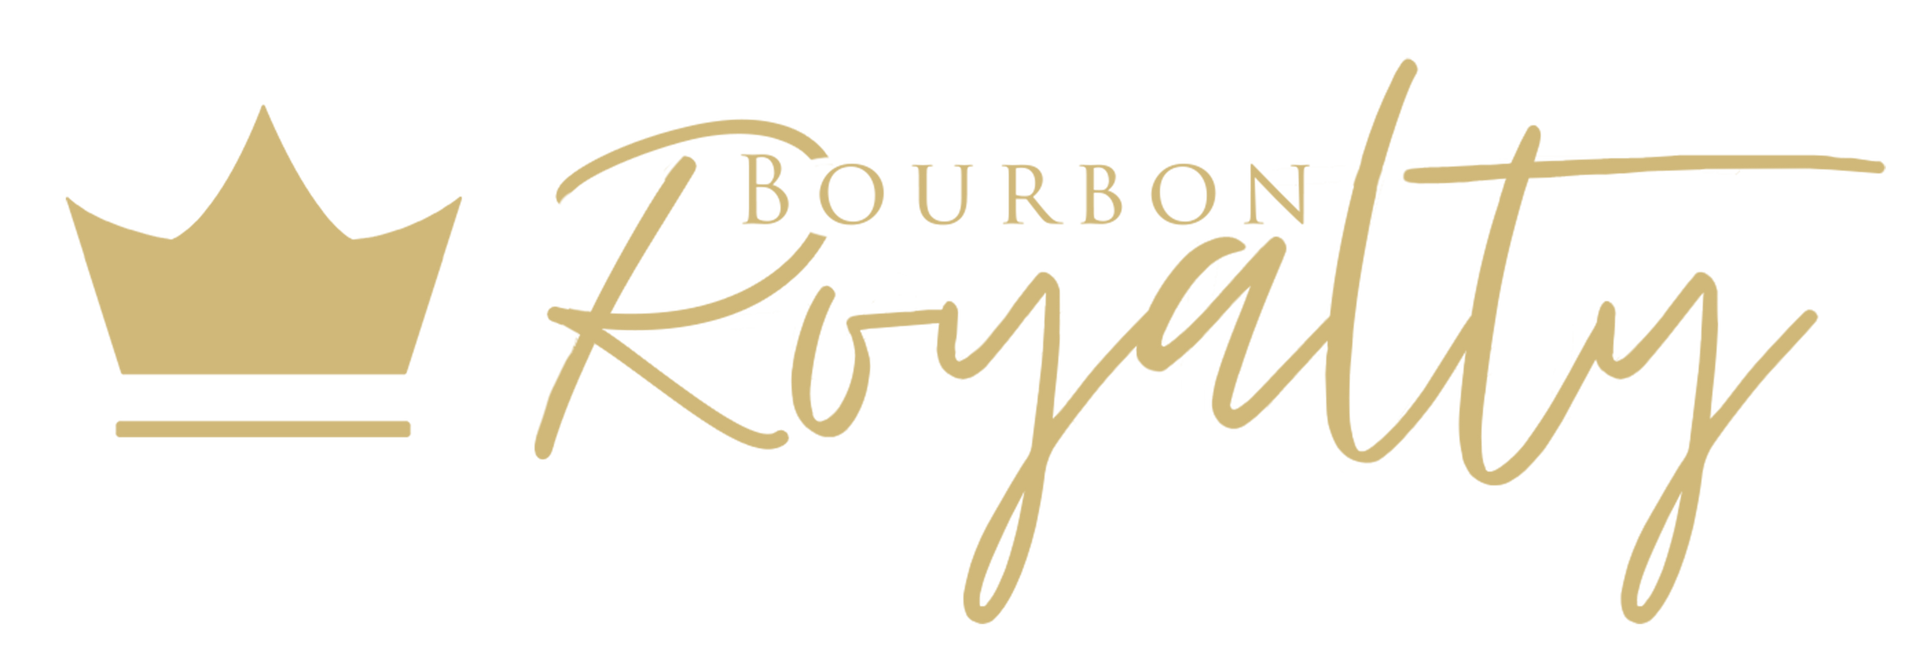 Bourbon Royalty Logo